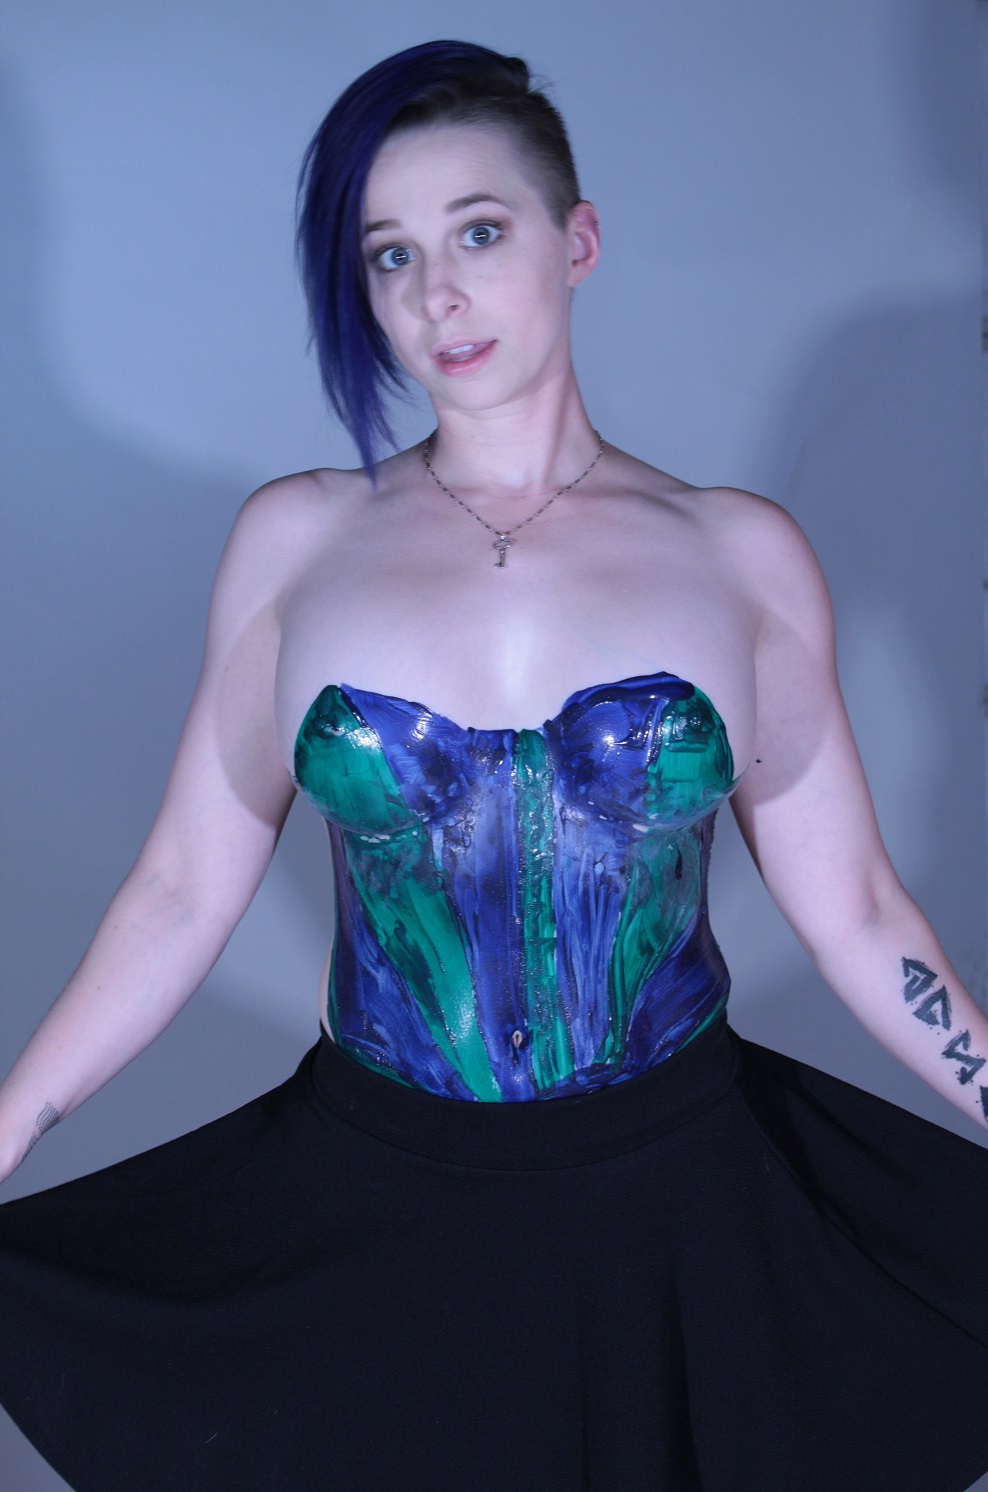 purple and green latex top on woman's torso